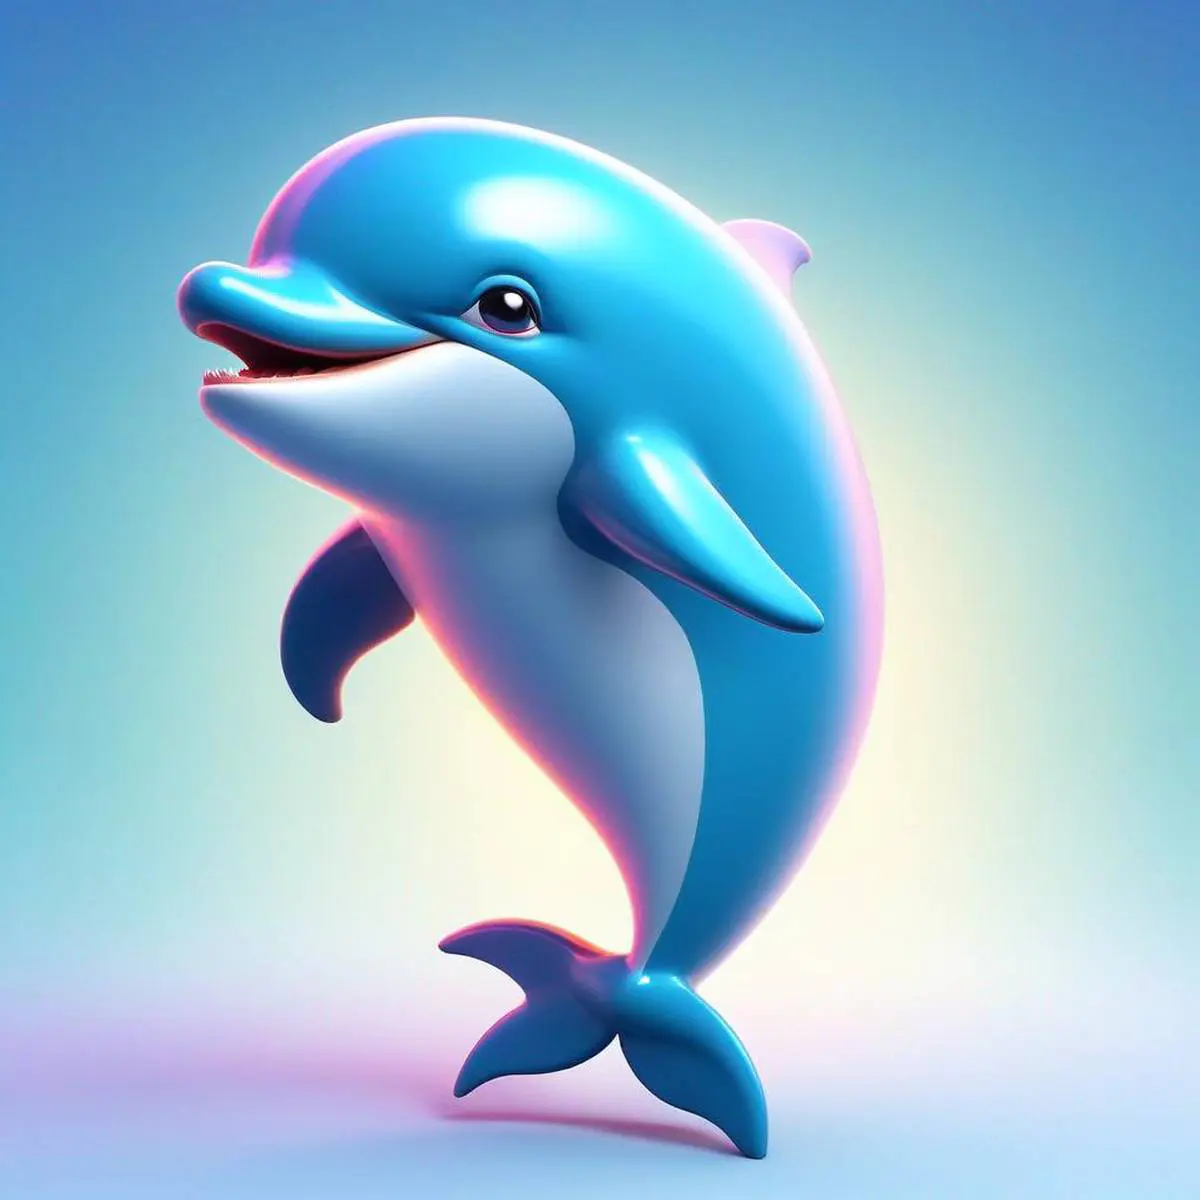 Dolphin puns